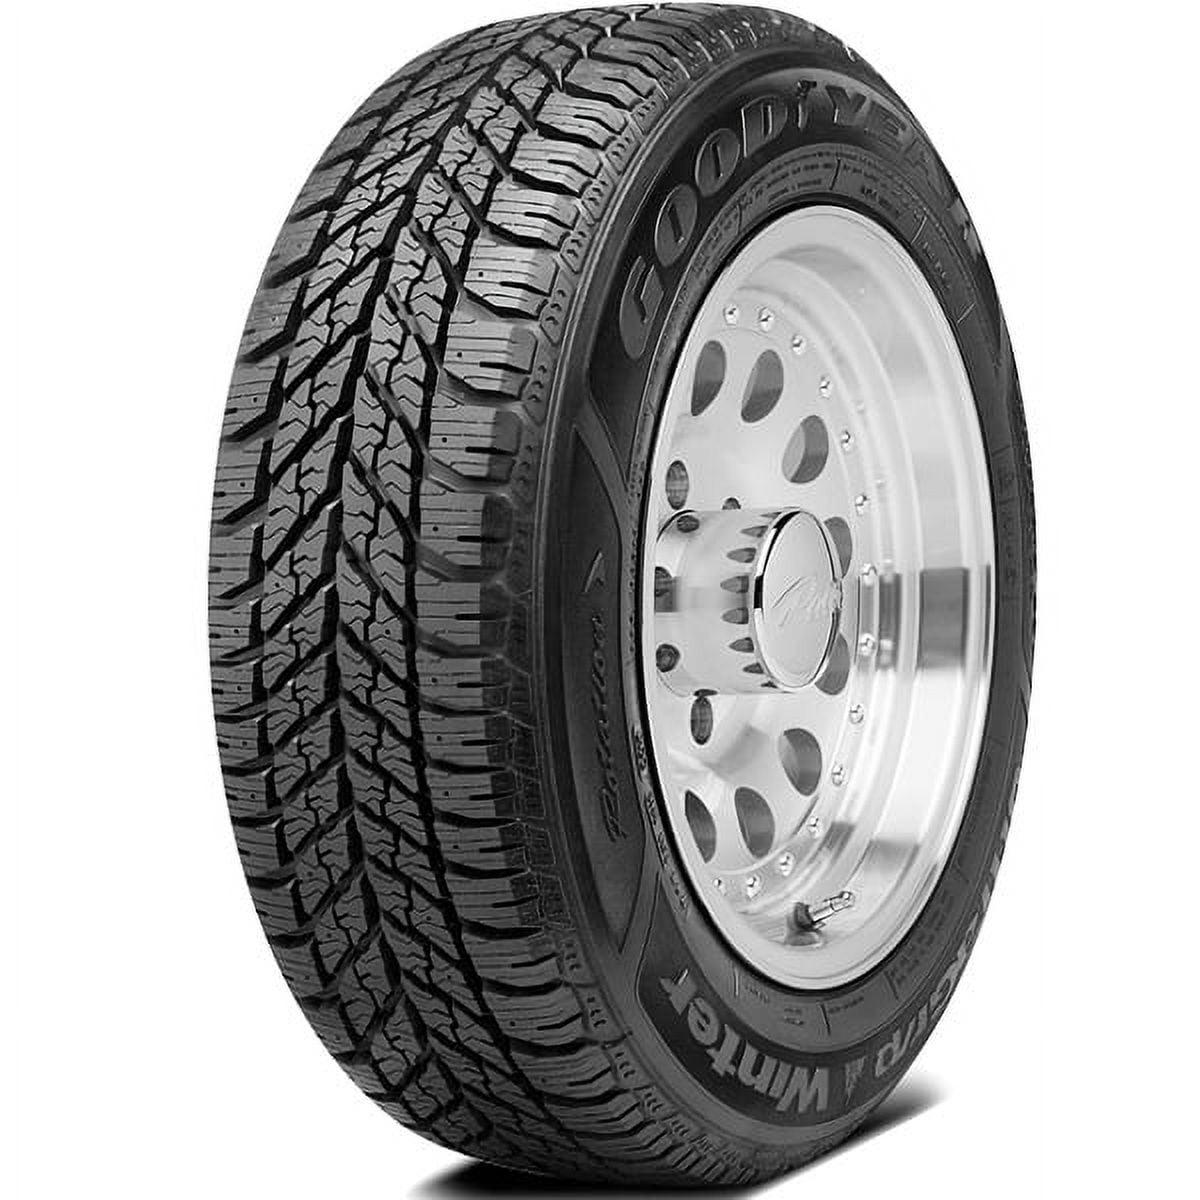 Goodyear Ultra Grip Winter Winter 225/50R17 94T Passenger Tire Fits:  2012-15 Chevrolet Cruze LT, 2016 Chevrolet Cruze Limited LT